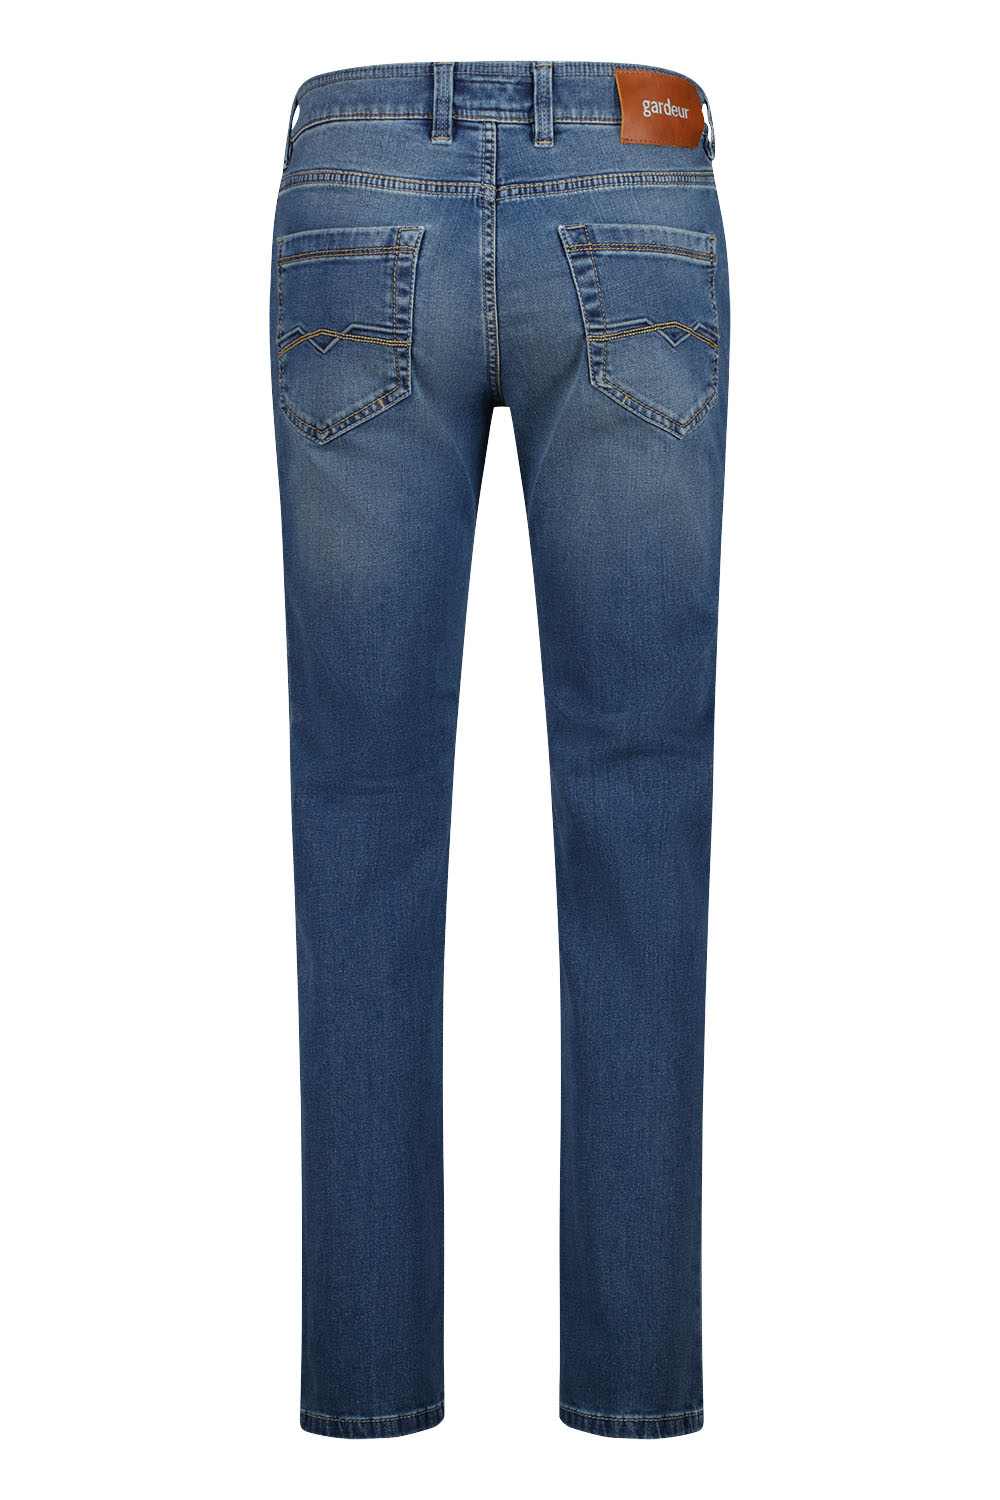 Gardeur - Batu Jeans Indigo Blauw - Maat W 36 - L 34 - Modern-fit